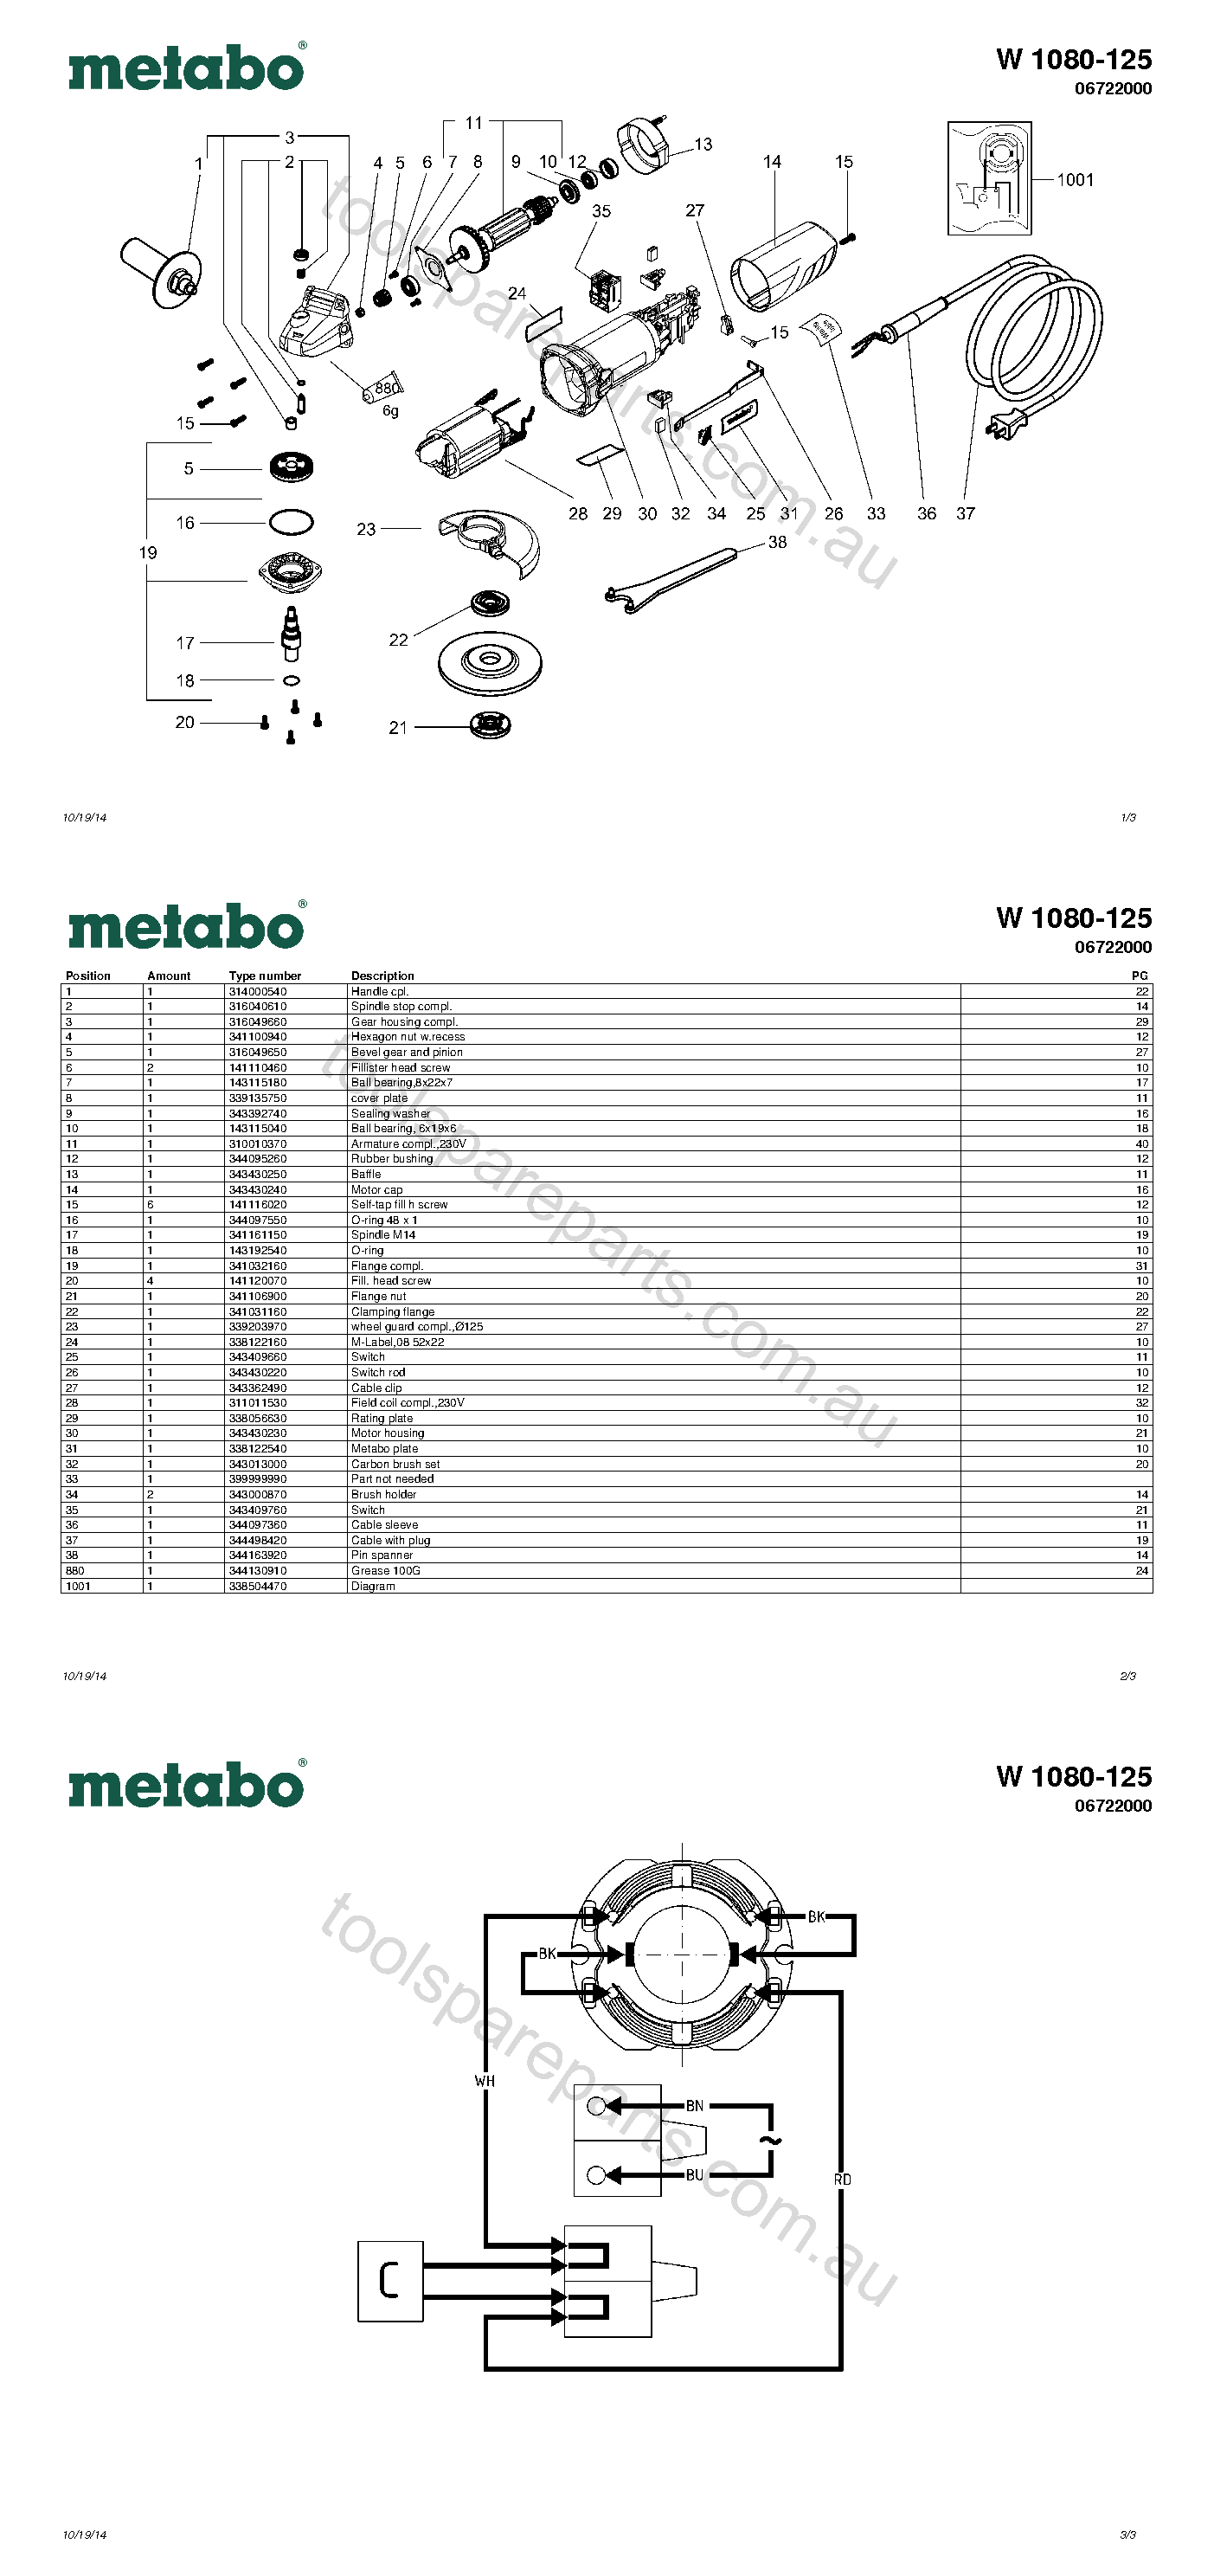 Metabo W 1080-125 06722000  Diagram 1